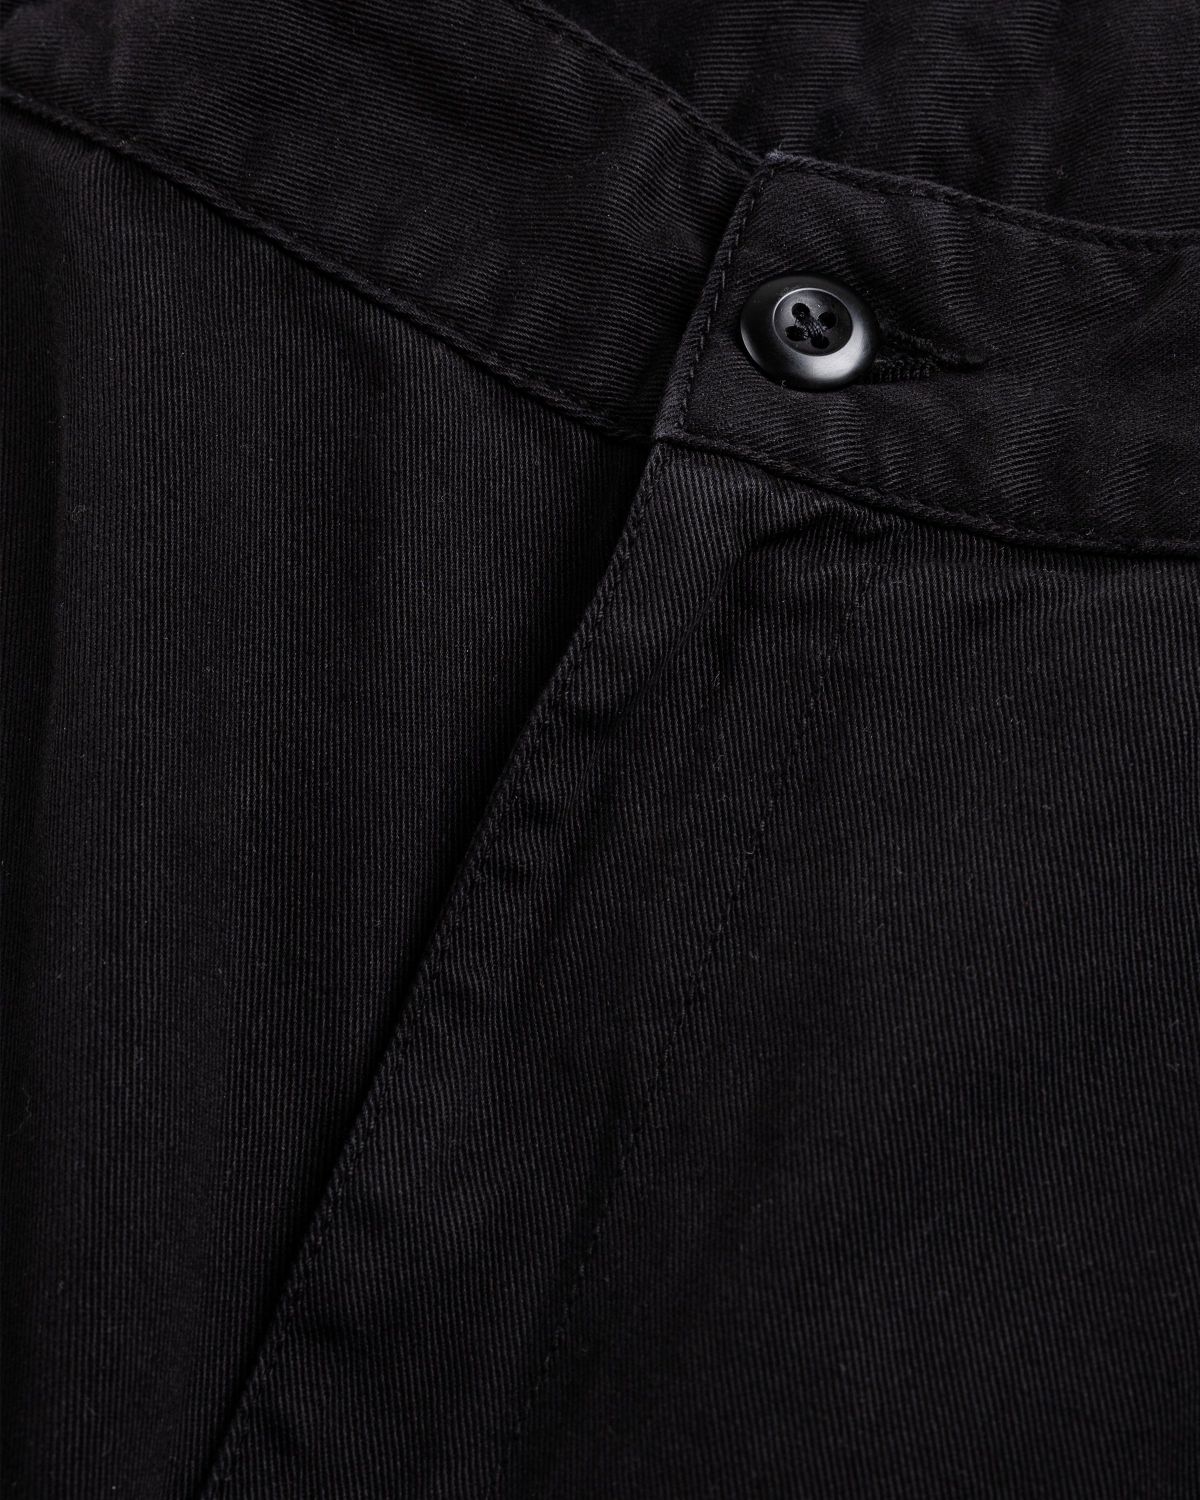 Carhartt WIP – Cole Cargo Short Black - Shorts - Black - Image 4